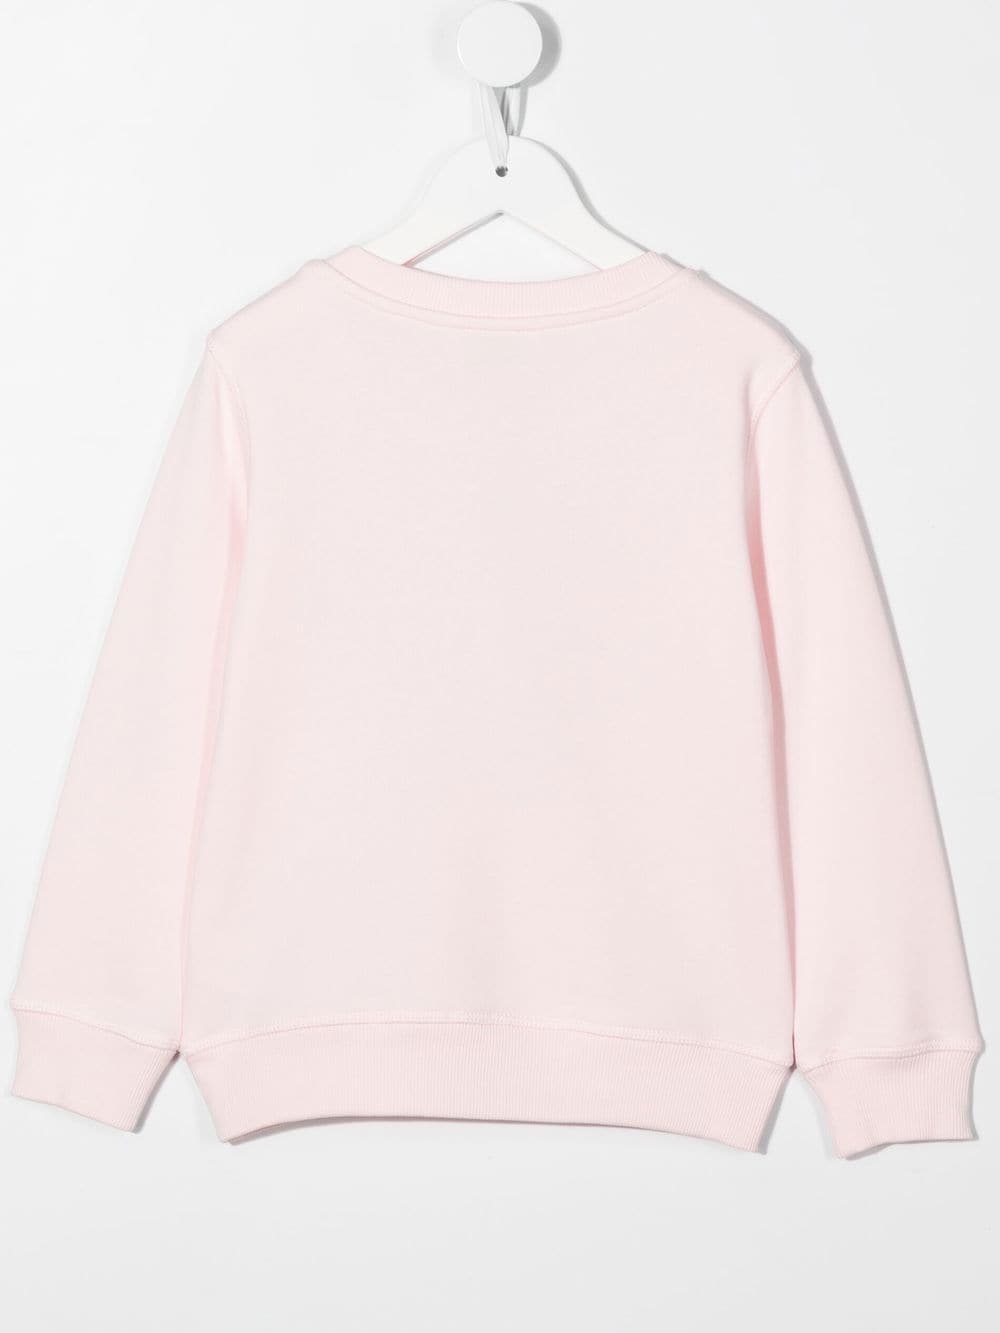 Kenzo Kid's Tiger Embroidered Sweatshirt - Color: Pink Pale - Kids Premium Clothing -